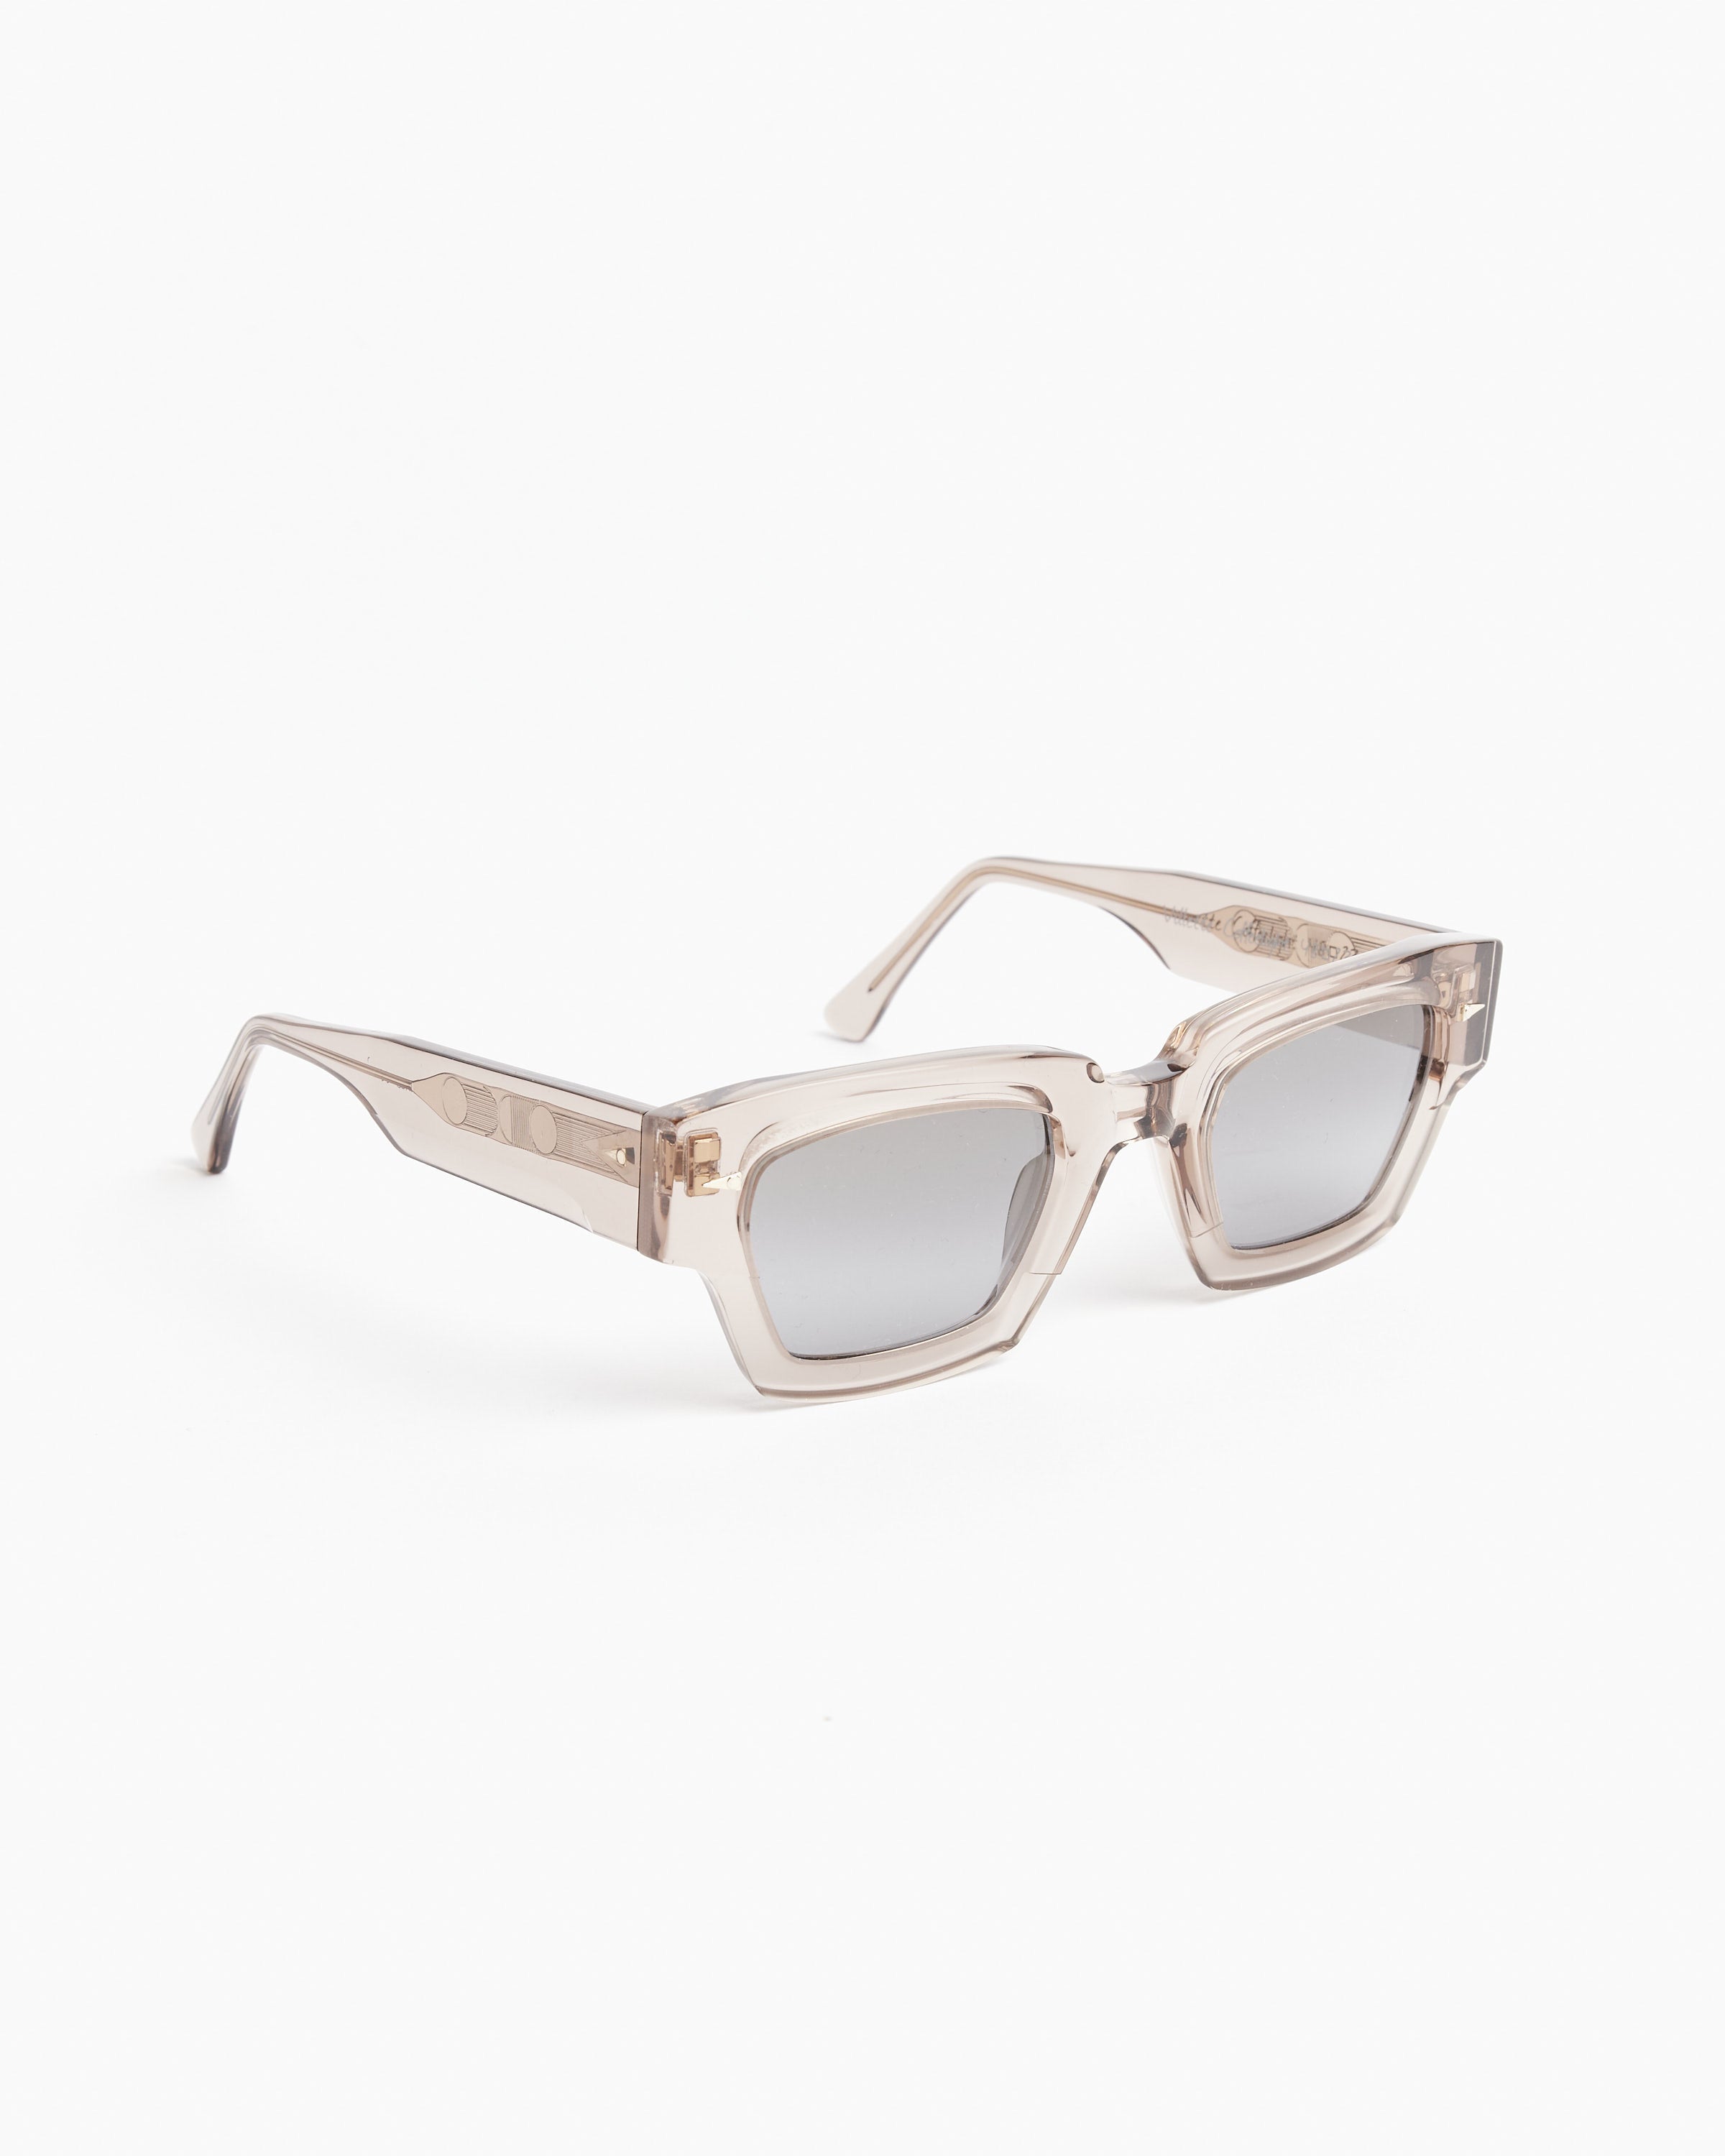 Villette Sunglasses in Coffee Light/Grey Gradient